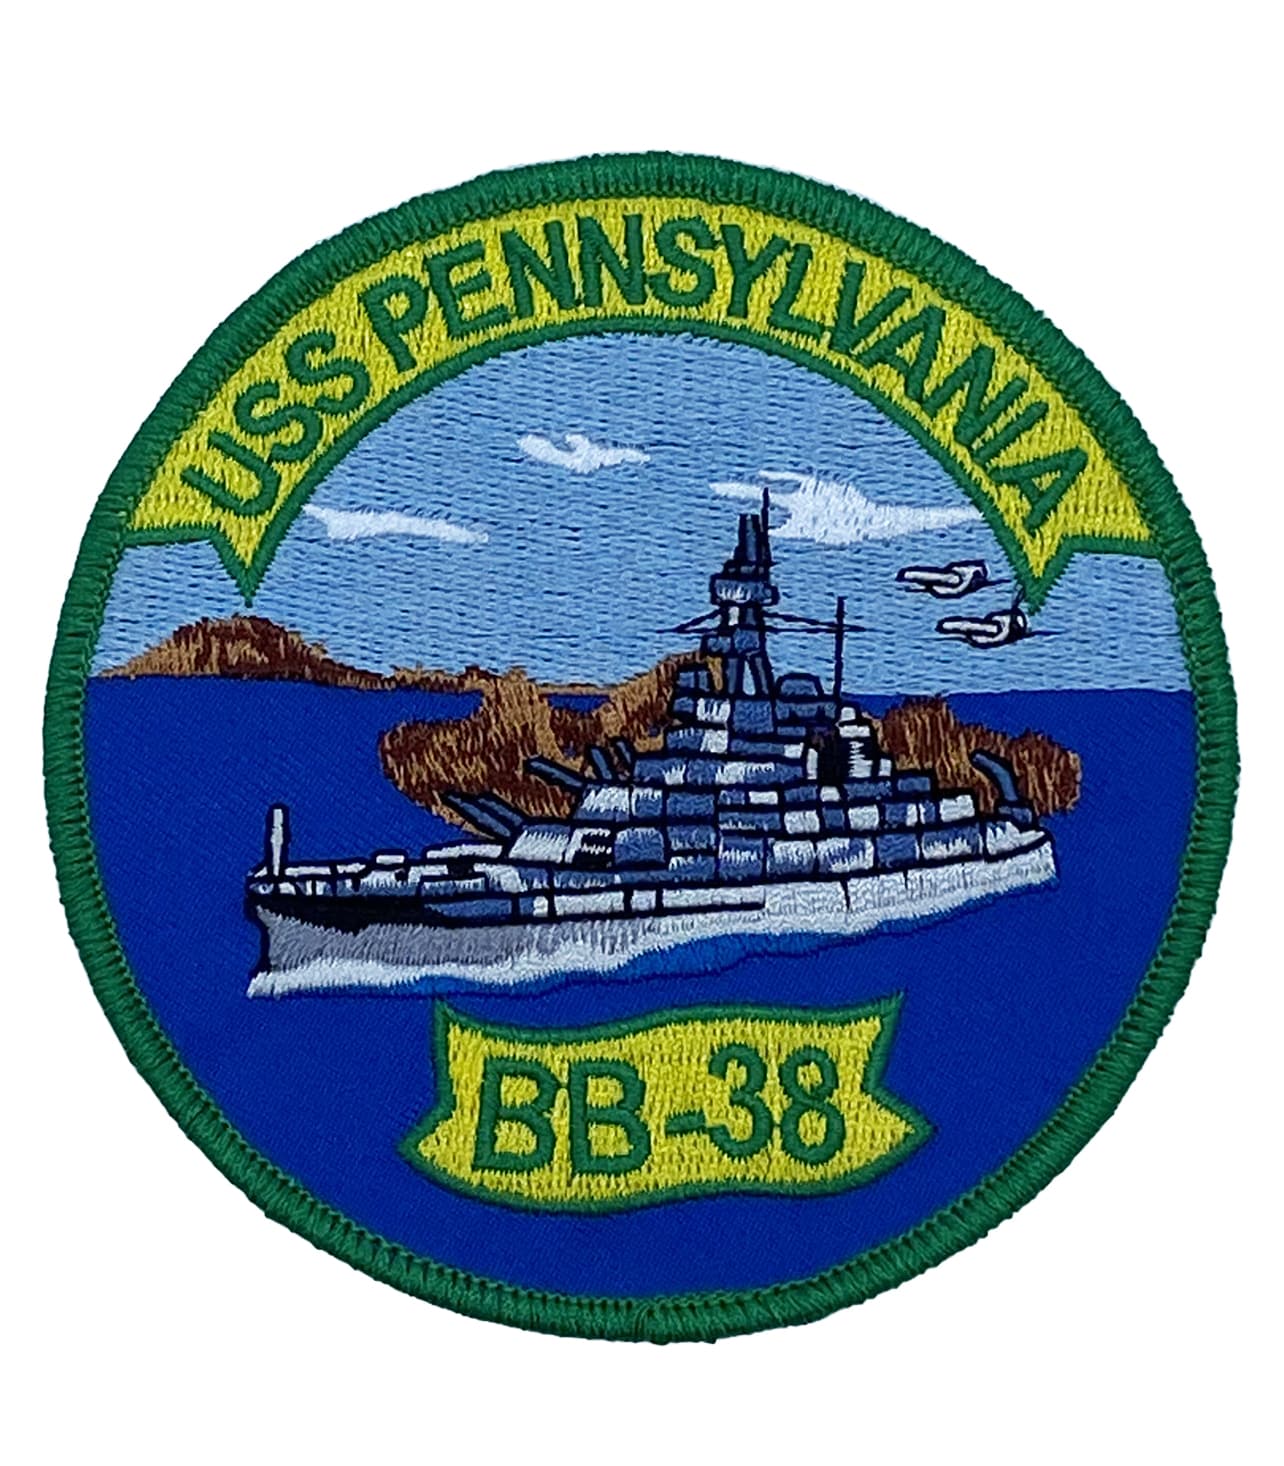 USS Pennsylvania BB-38 Patch – Plastic Backing